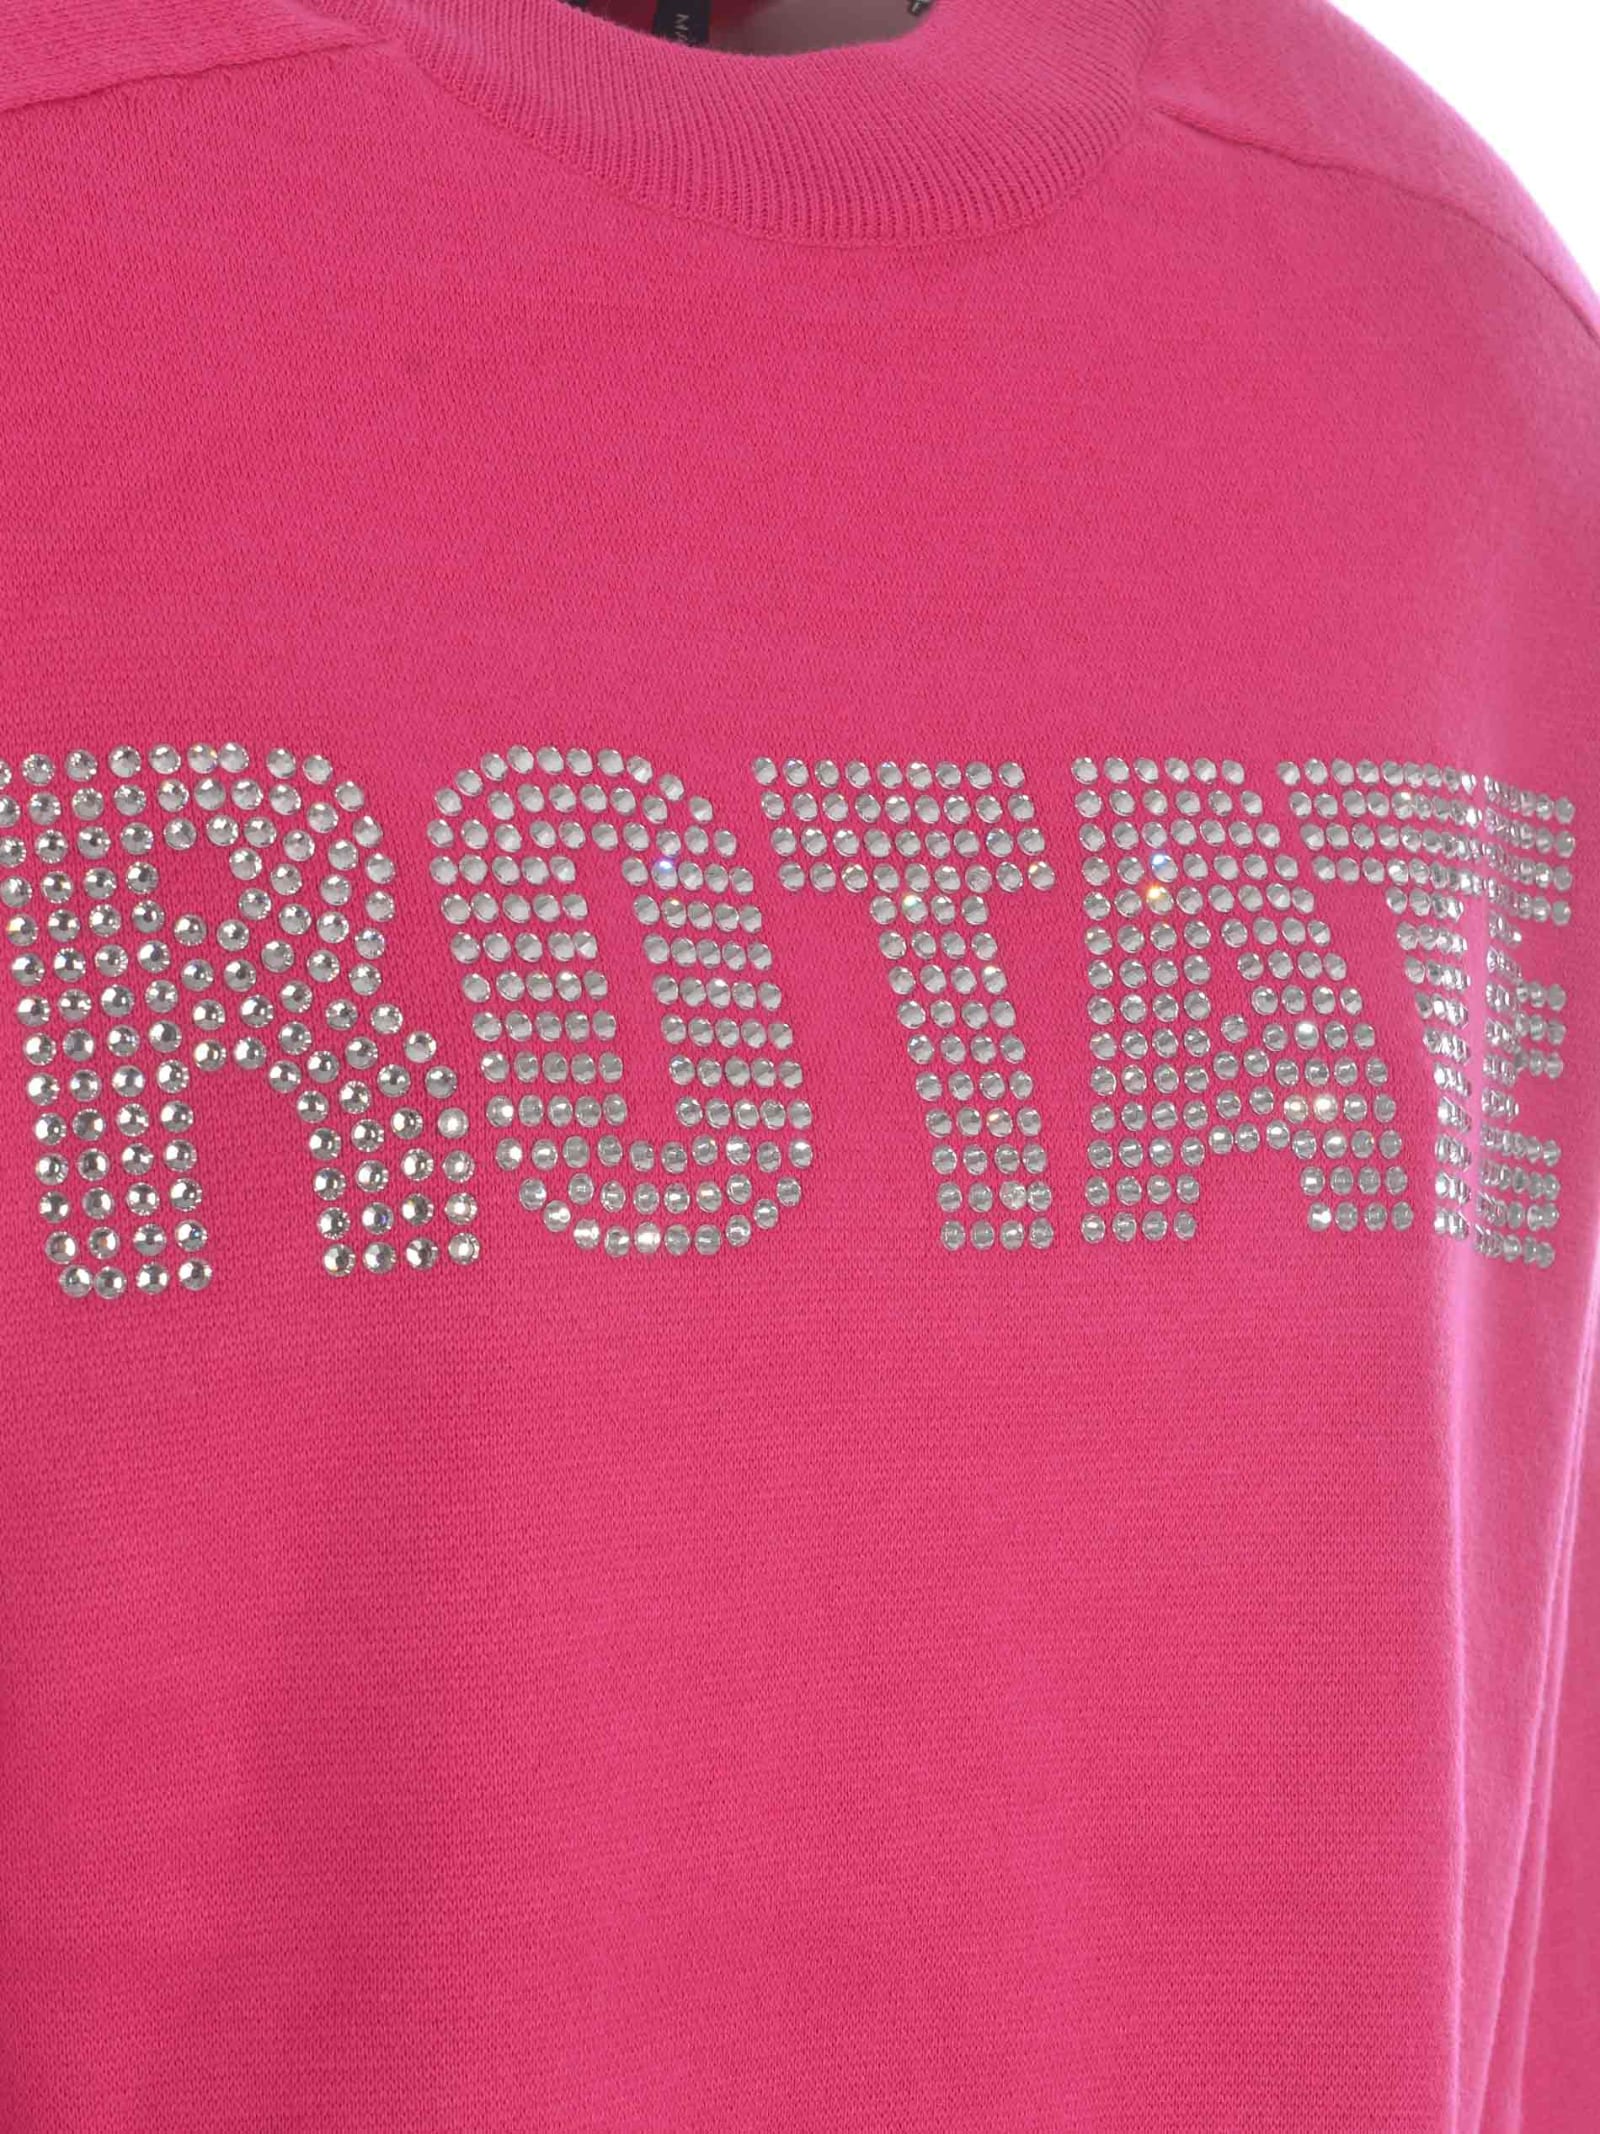 Shop Rotate Birger Christensen Sweatshirt Rotate In Cotton And Cashmere Blend In Fucsia